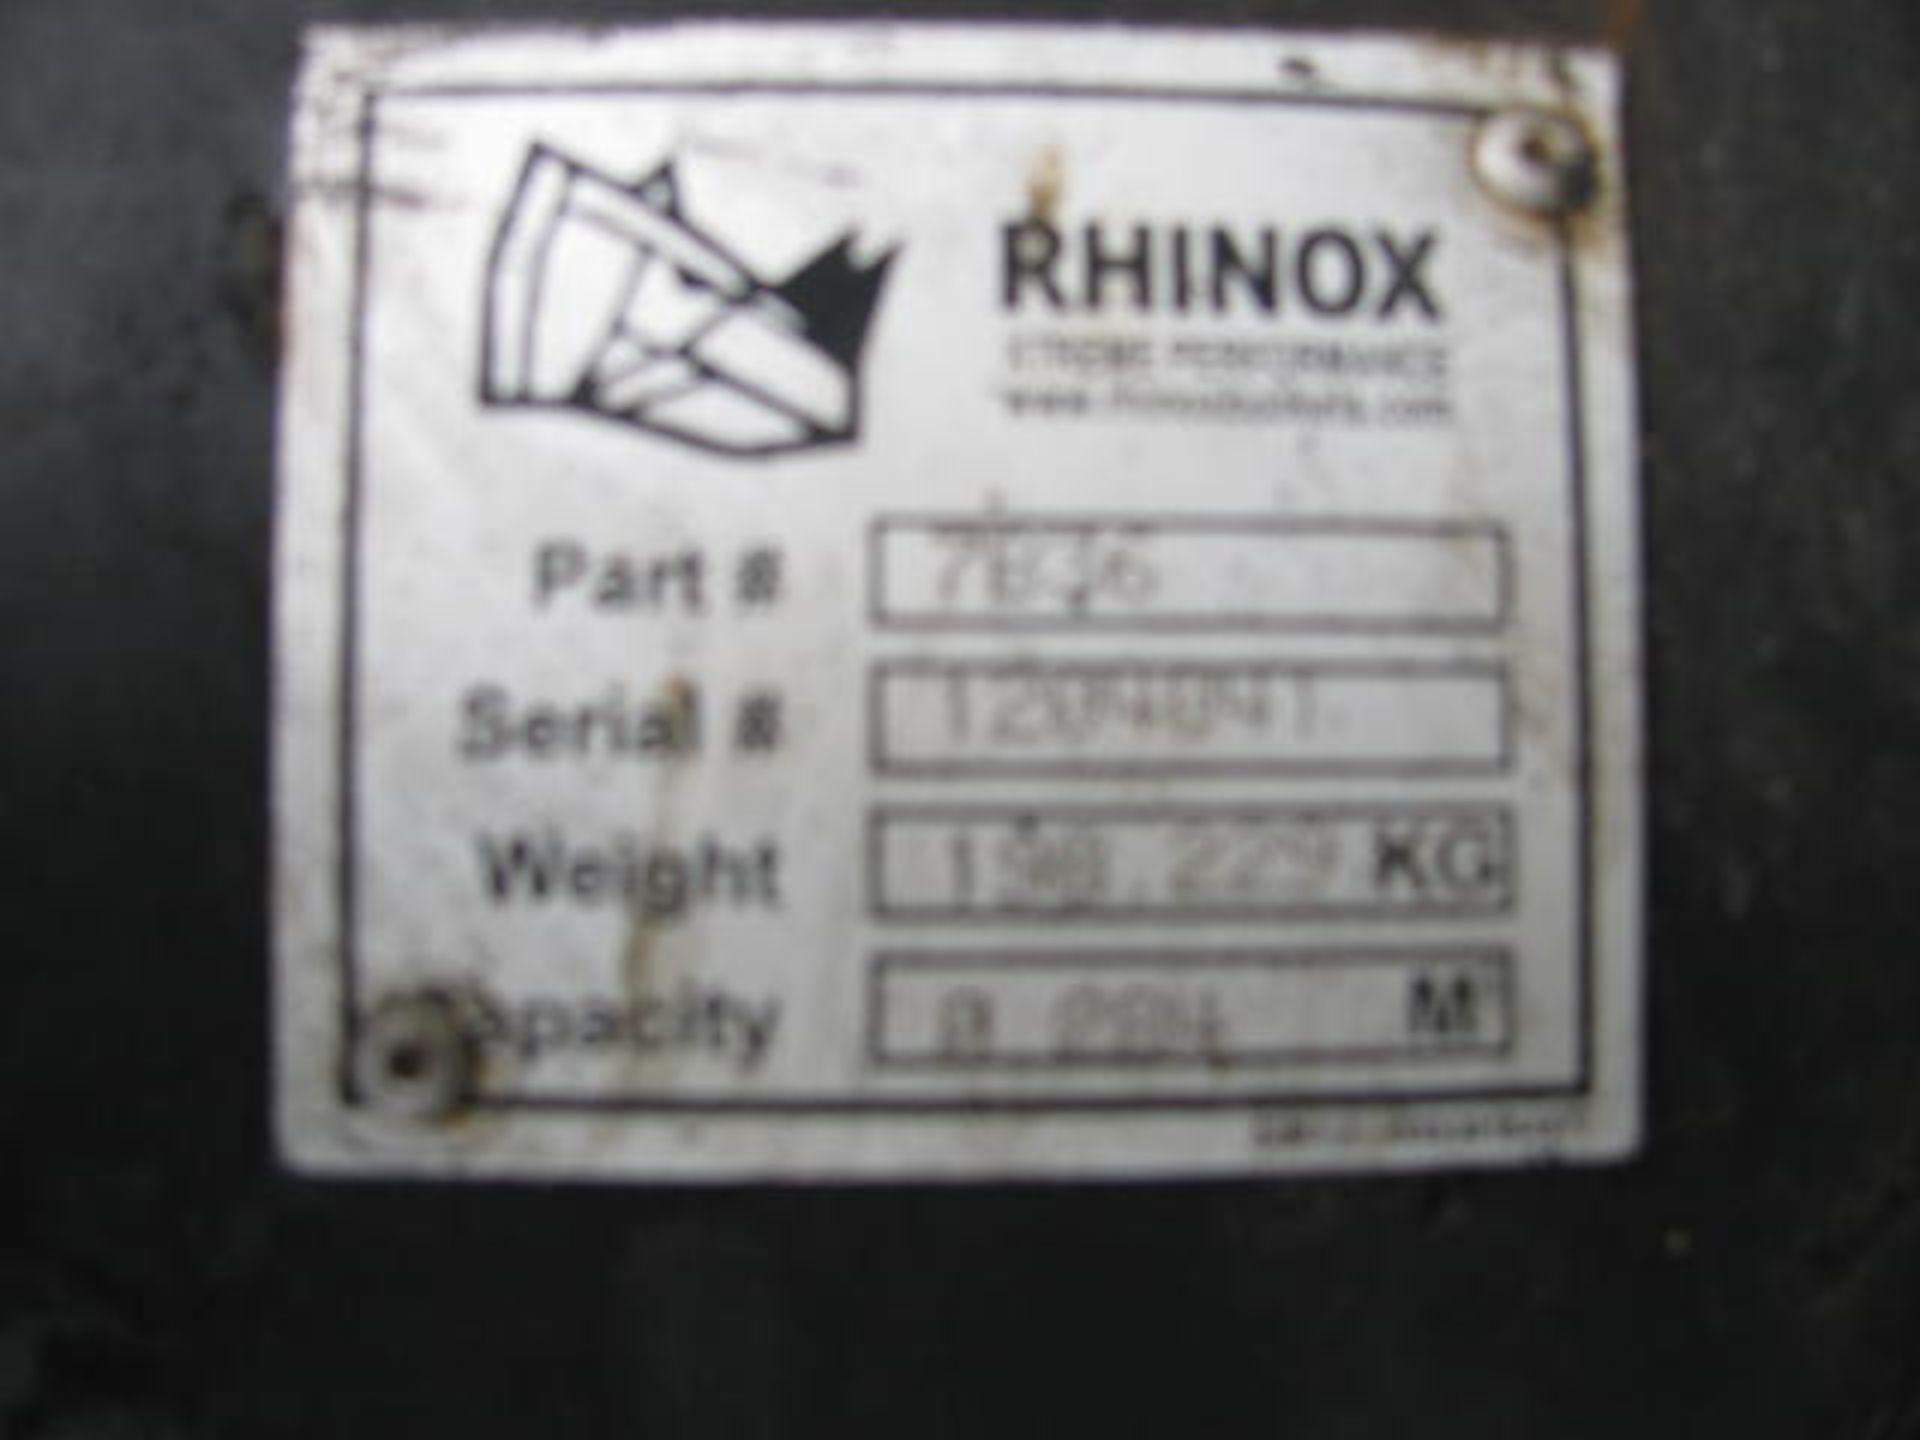 Rhinox Part No. 7B36 excavator bucket - Image 3 of 3